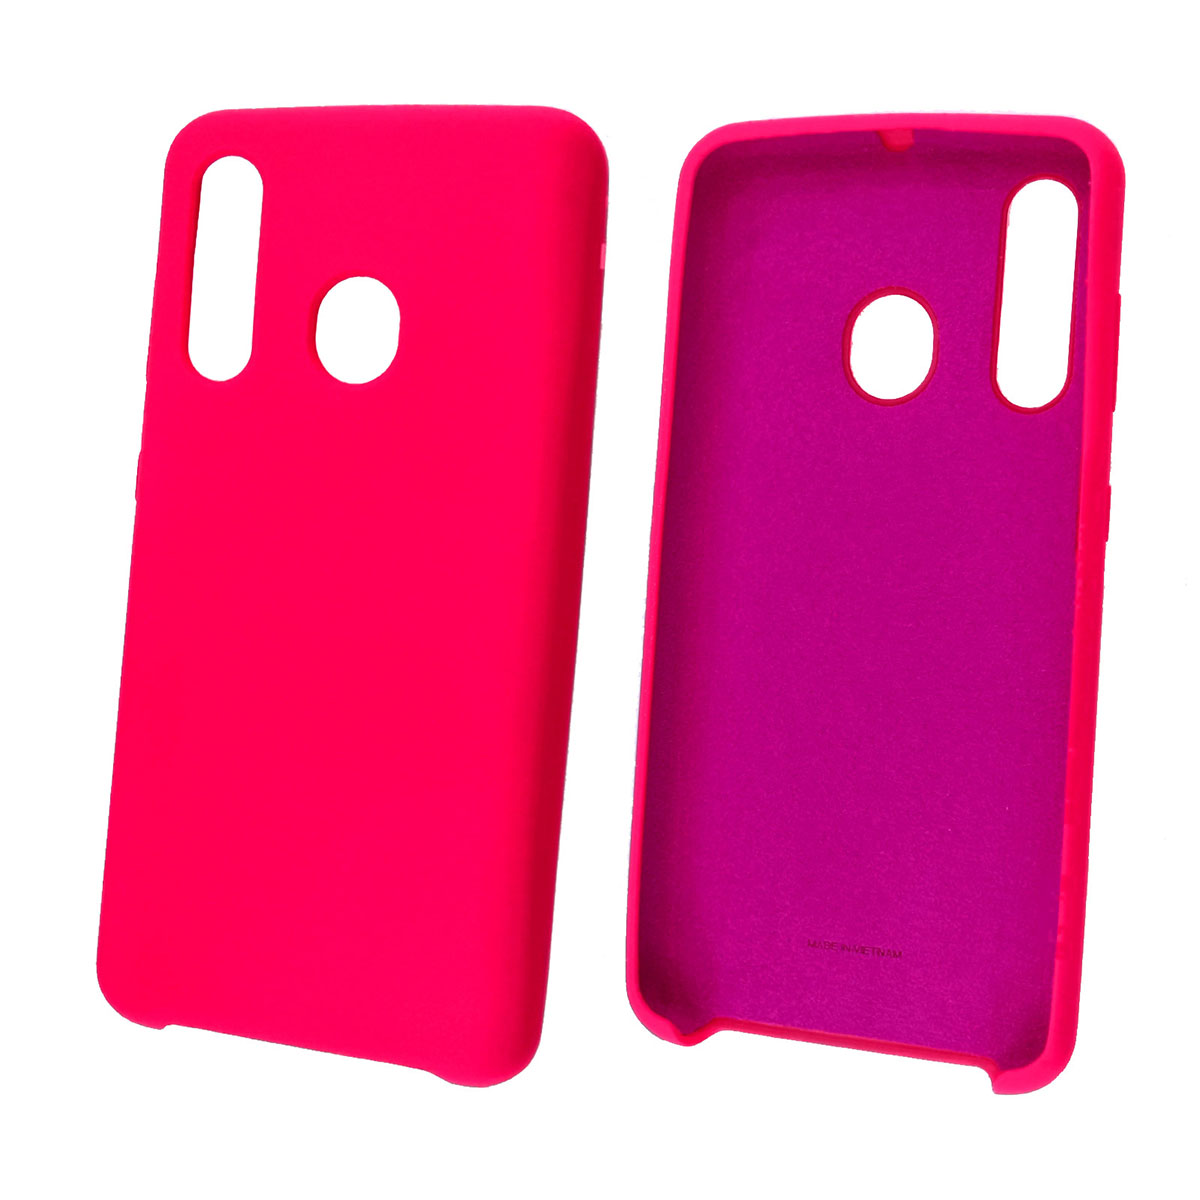 Чехол накладка Silicon Cover для SAMSUNG Galaxy A60 2019 (SM-A605), Galaxy M40 (SM-M405), силикон, бархат, цвет ярко розовый.